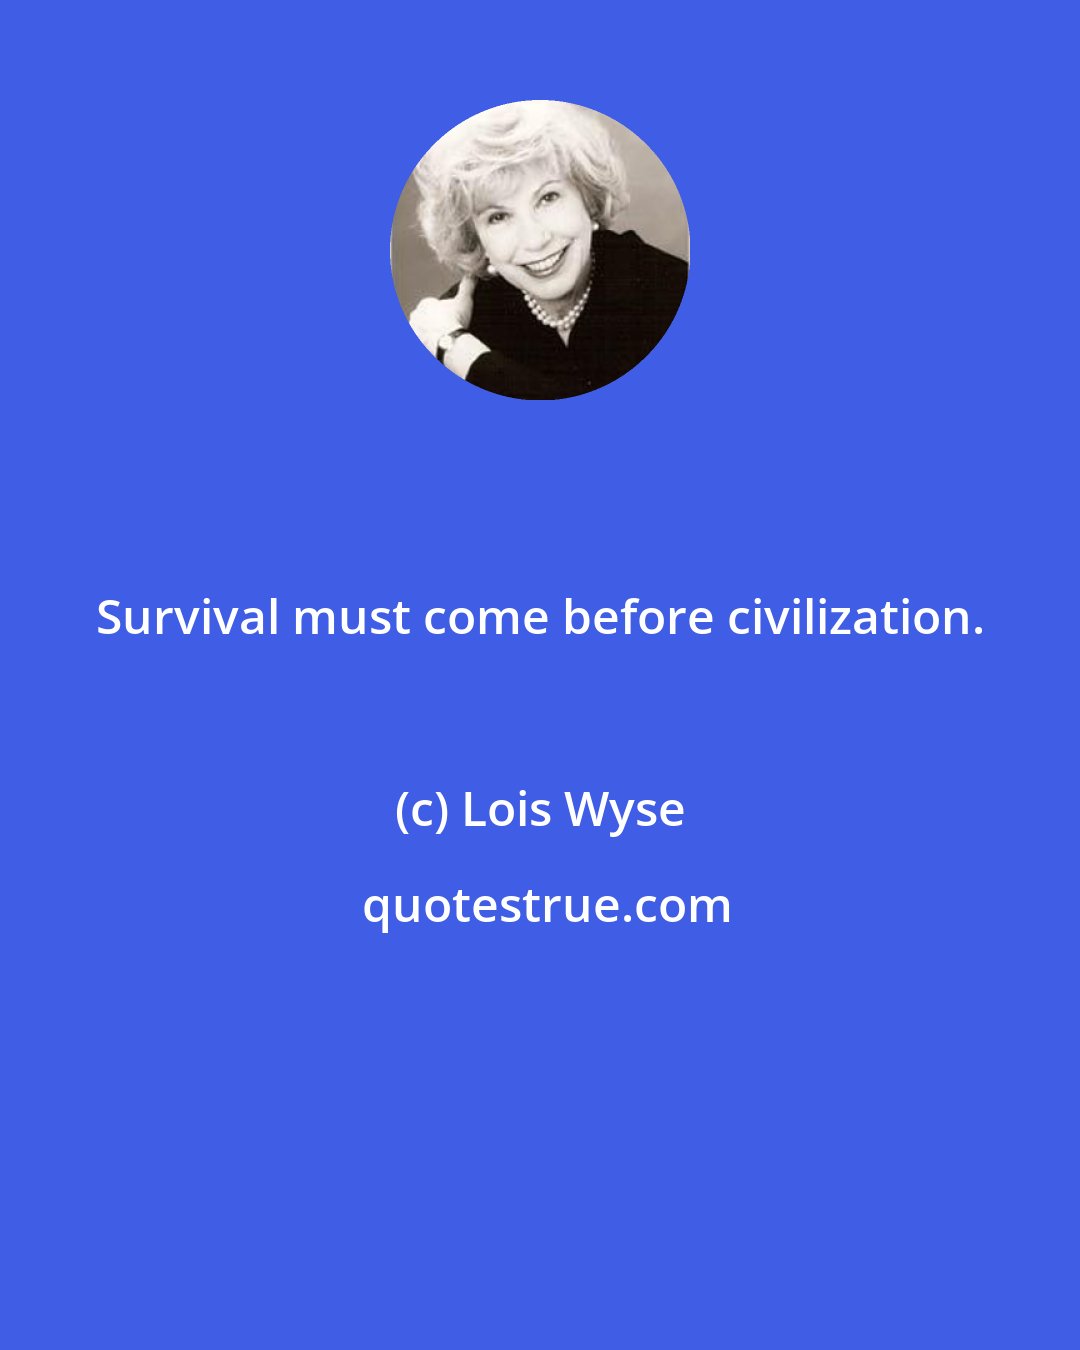 Lois Wyse: Survival must come before civilization.